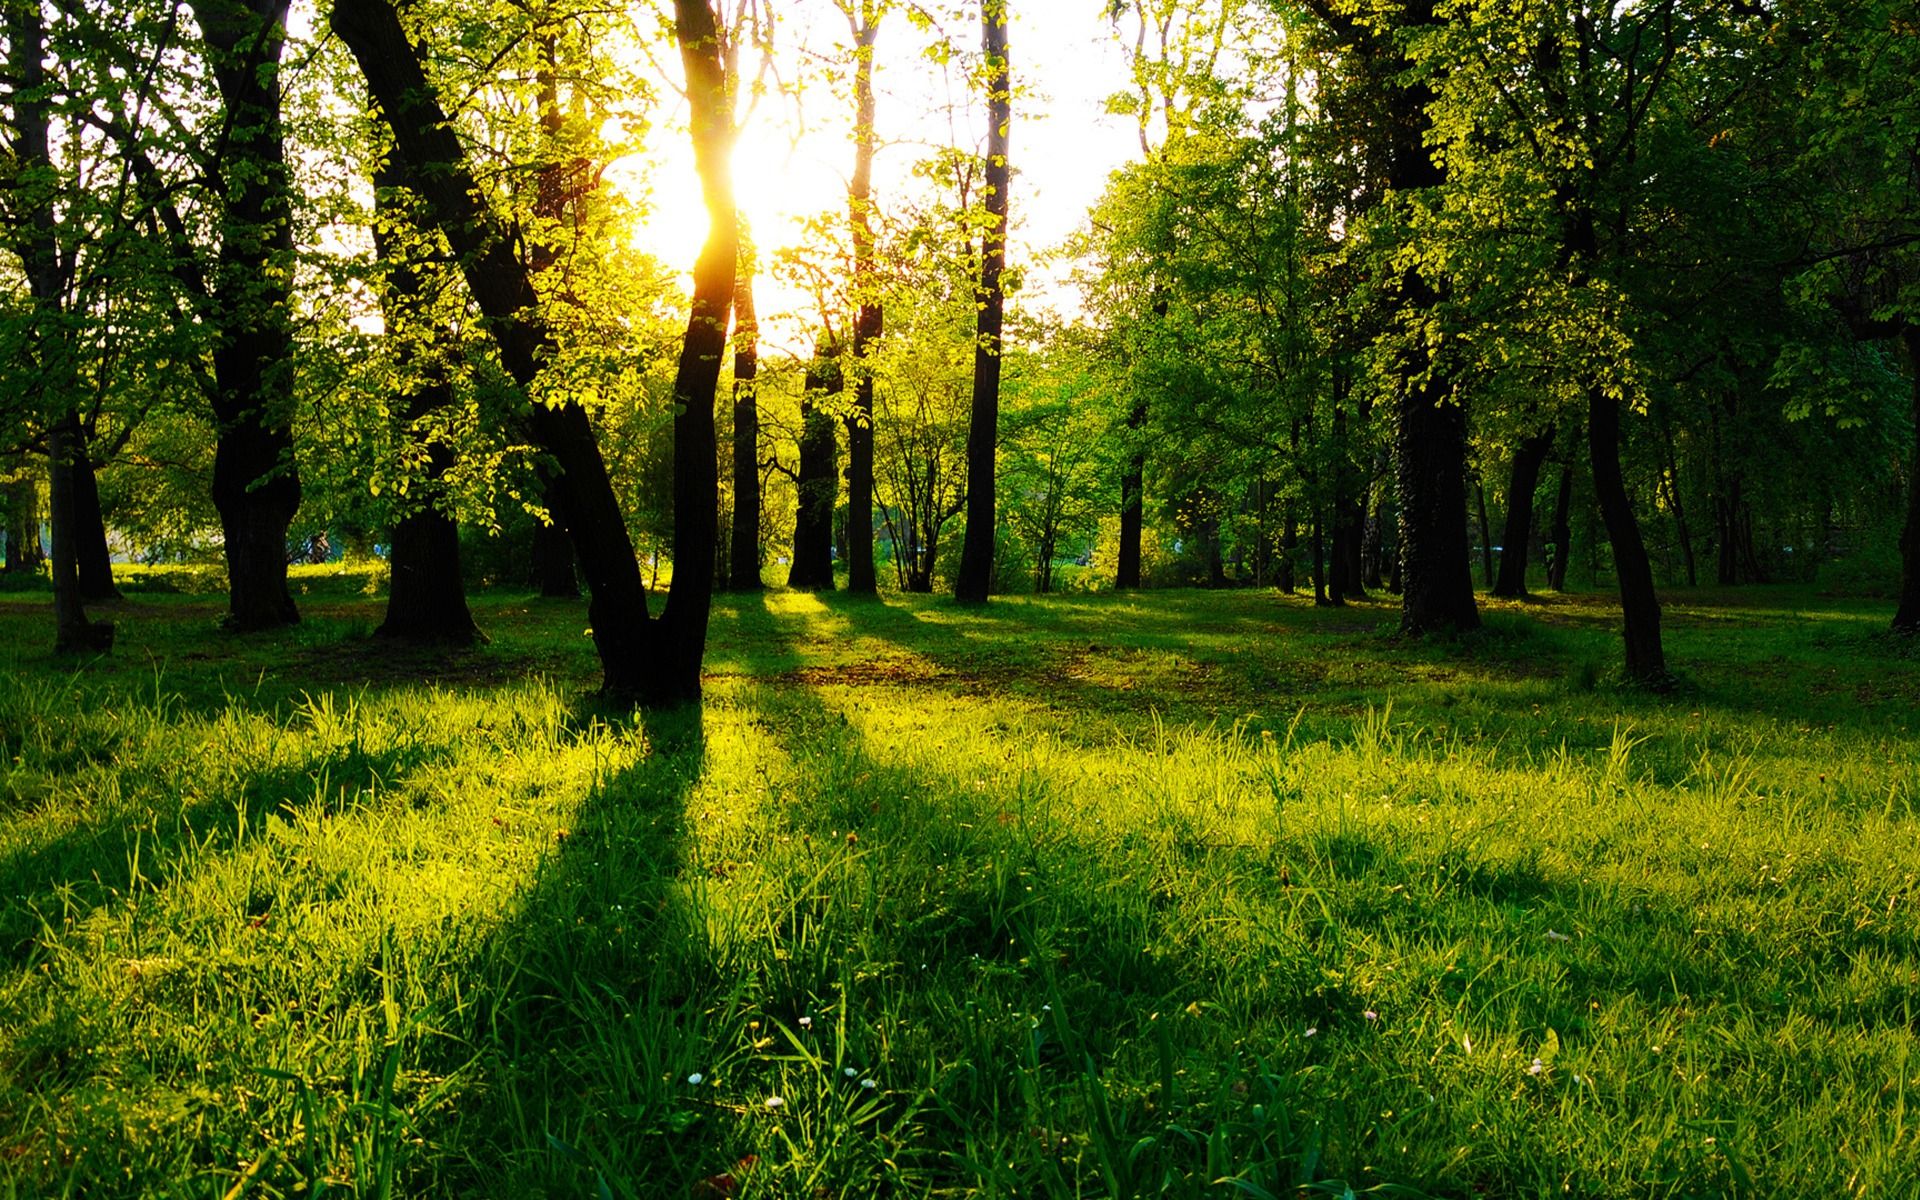 Sun Between Trees Wallpaper Landscape Nature Wallpaper in jpg format for free download